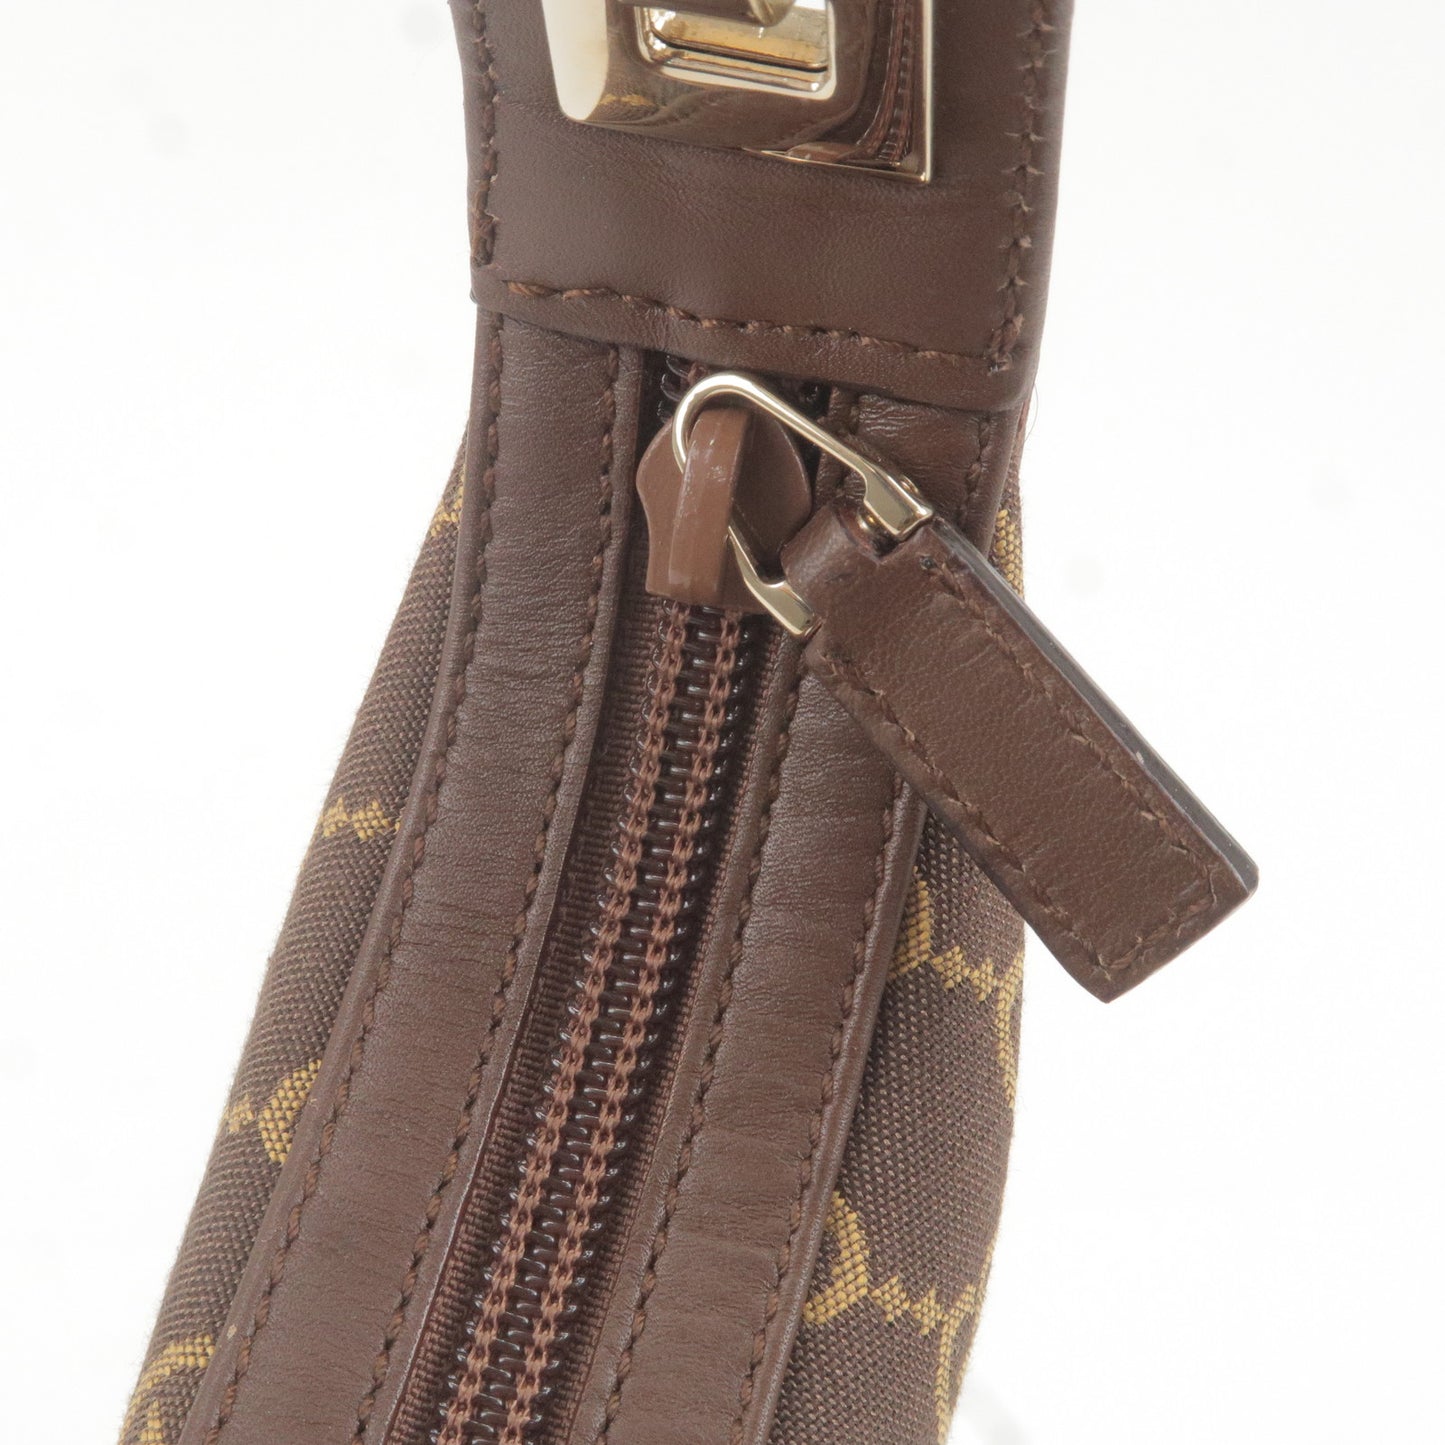 GUCCI GG Canvas Leather Shoulder Bag Brown Beige 001.4204